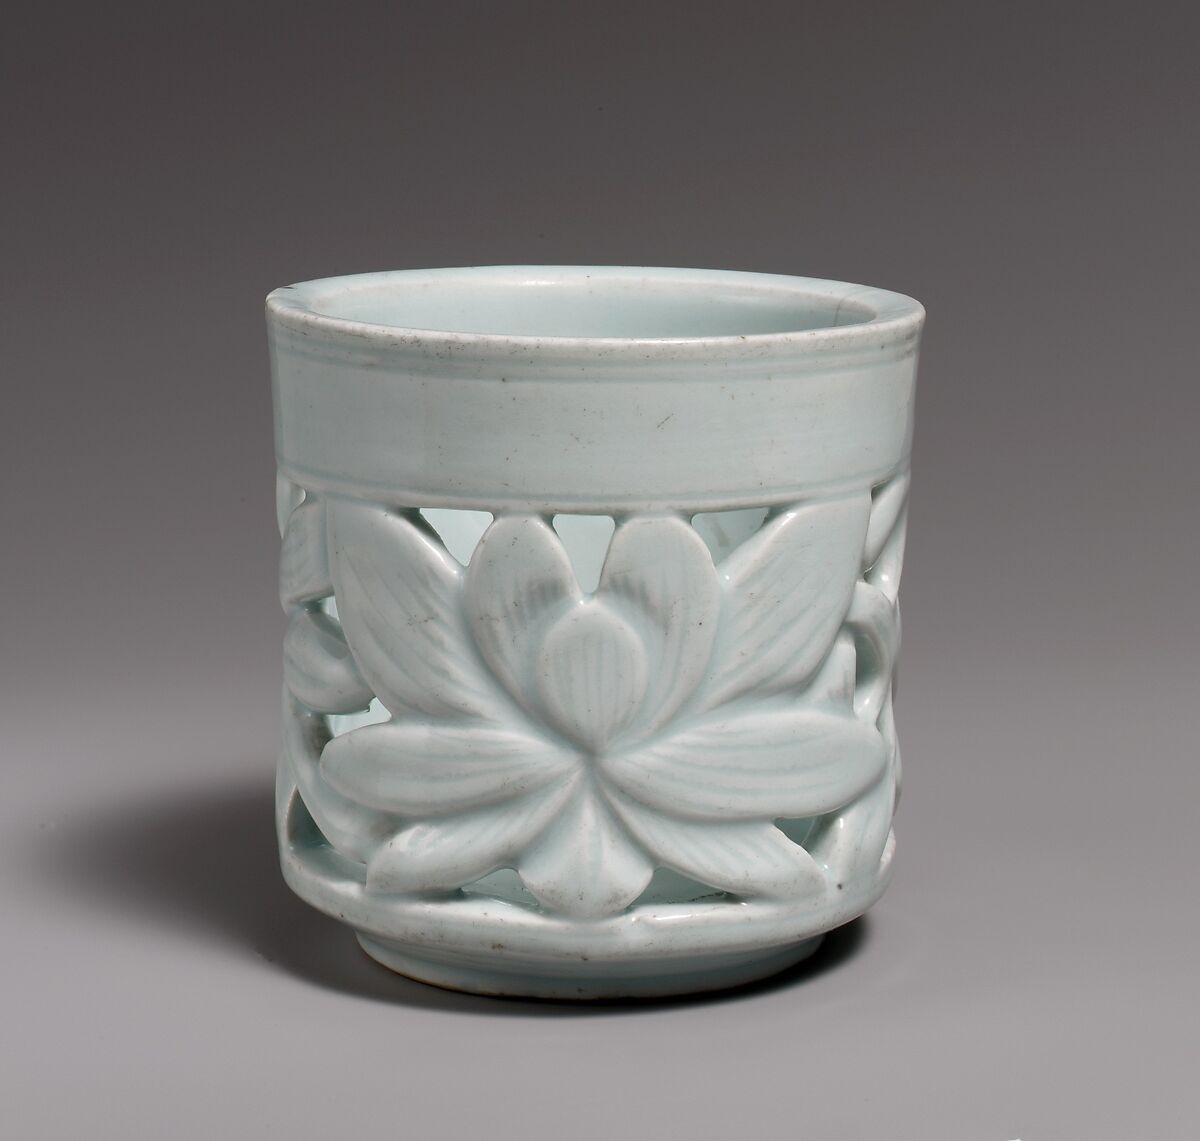 Brush holder with lotus decoration

, Porcelain with openwork design, Korea